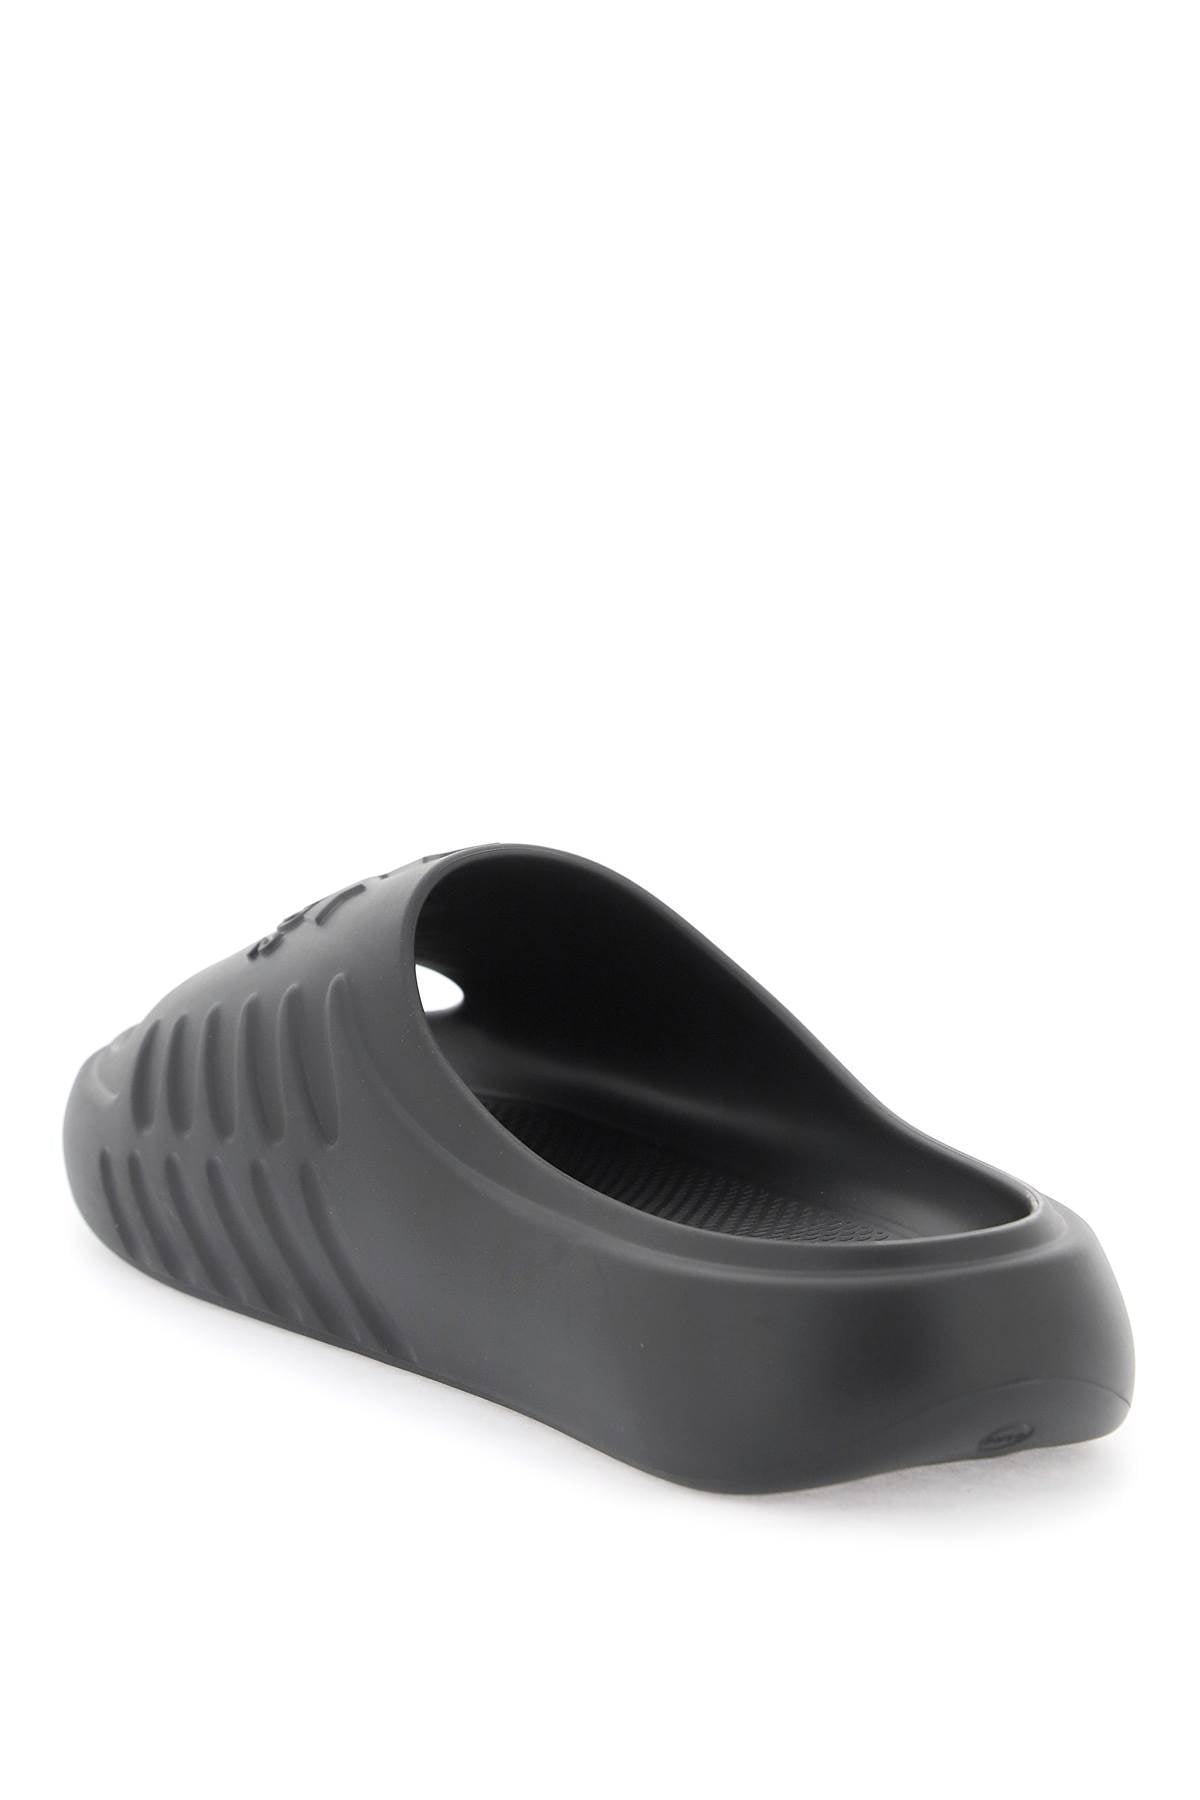 DSQUARED2 Oversized Rubber Slide Sandals with Canadian Maple Leaf Print for Men